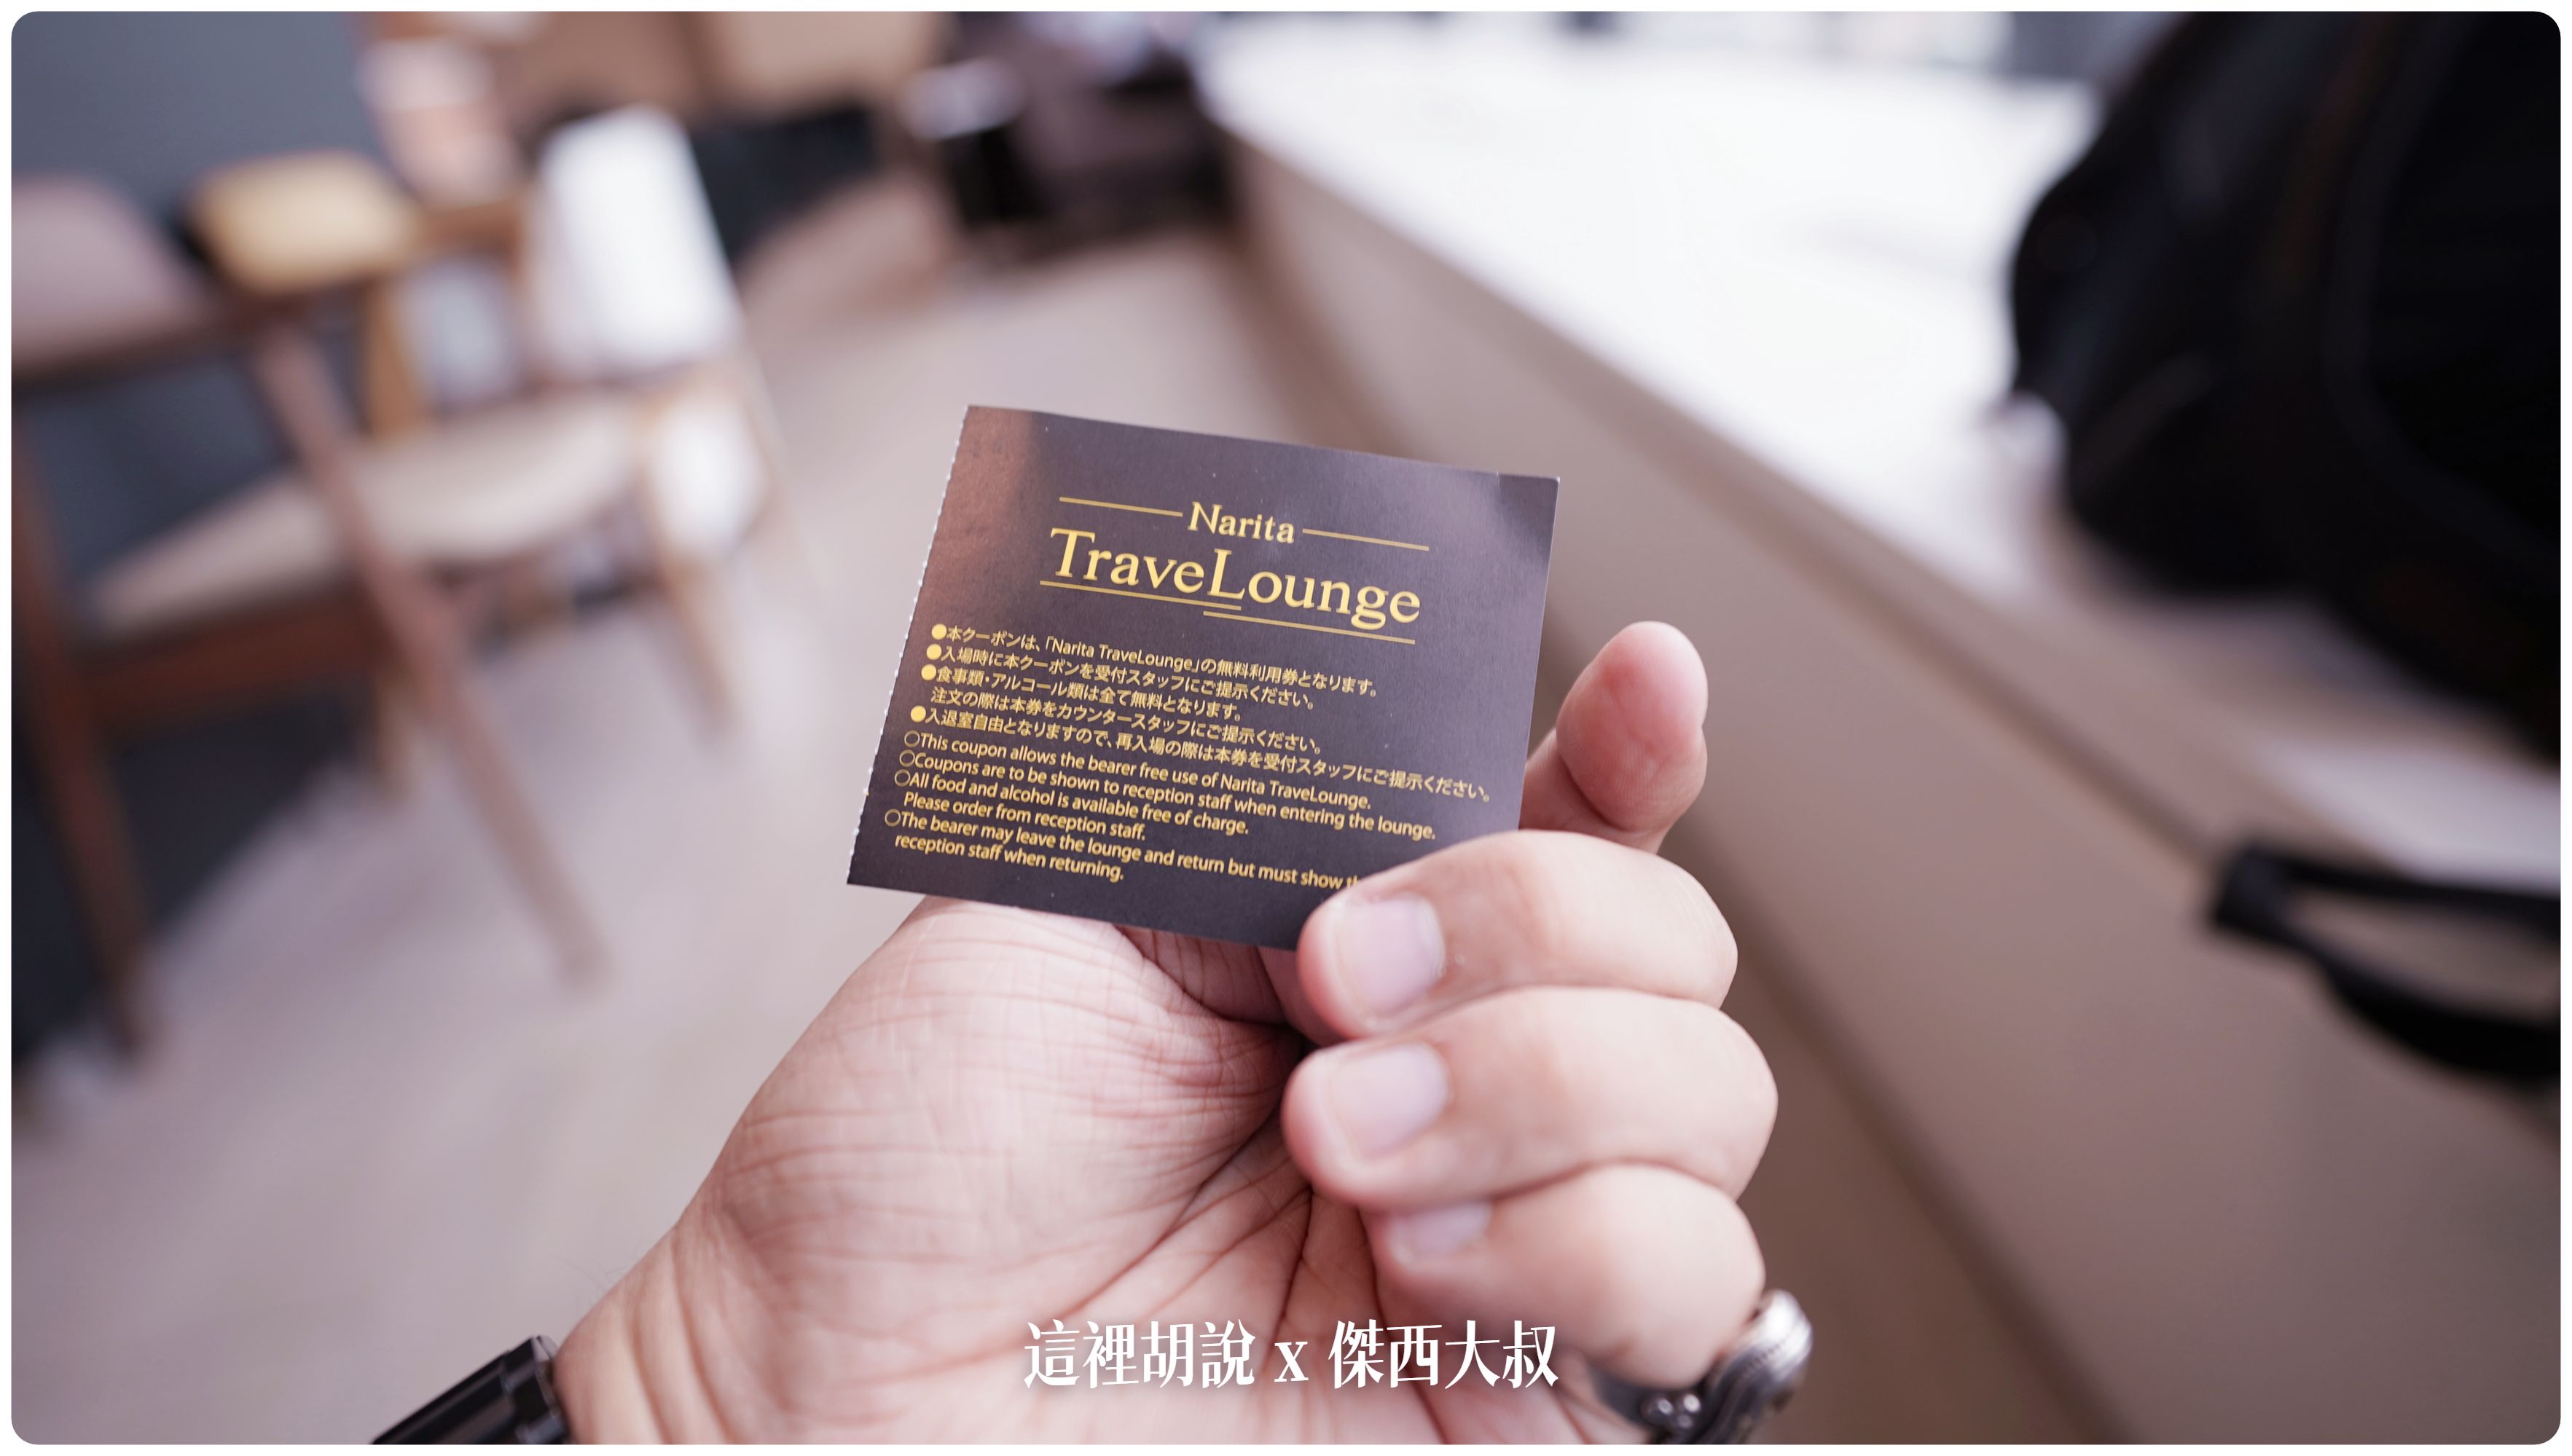 lounge,NRT,VIP LOUNGE,付費貴賓室,休息室,成田機場,東京,淋浴間,第一航廈,貴賓室,長榮航空貴賓室,餐飲